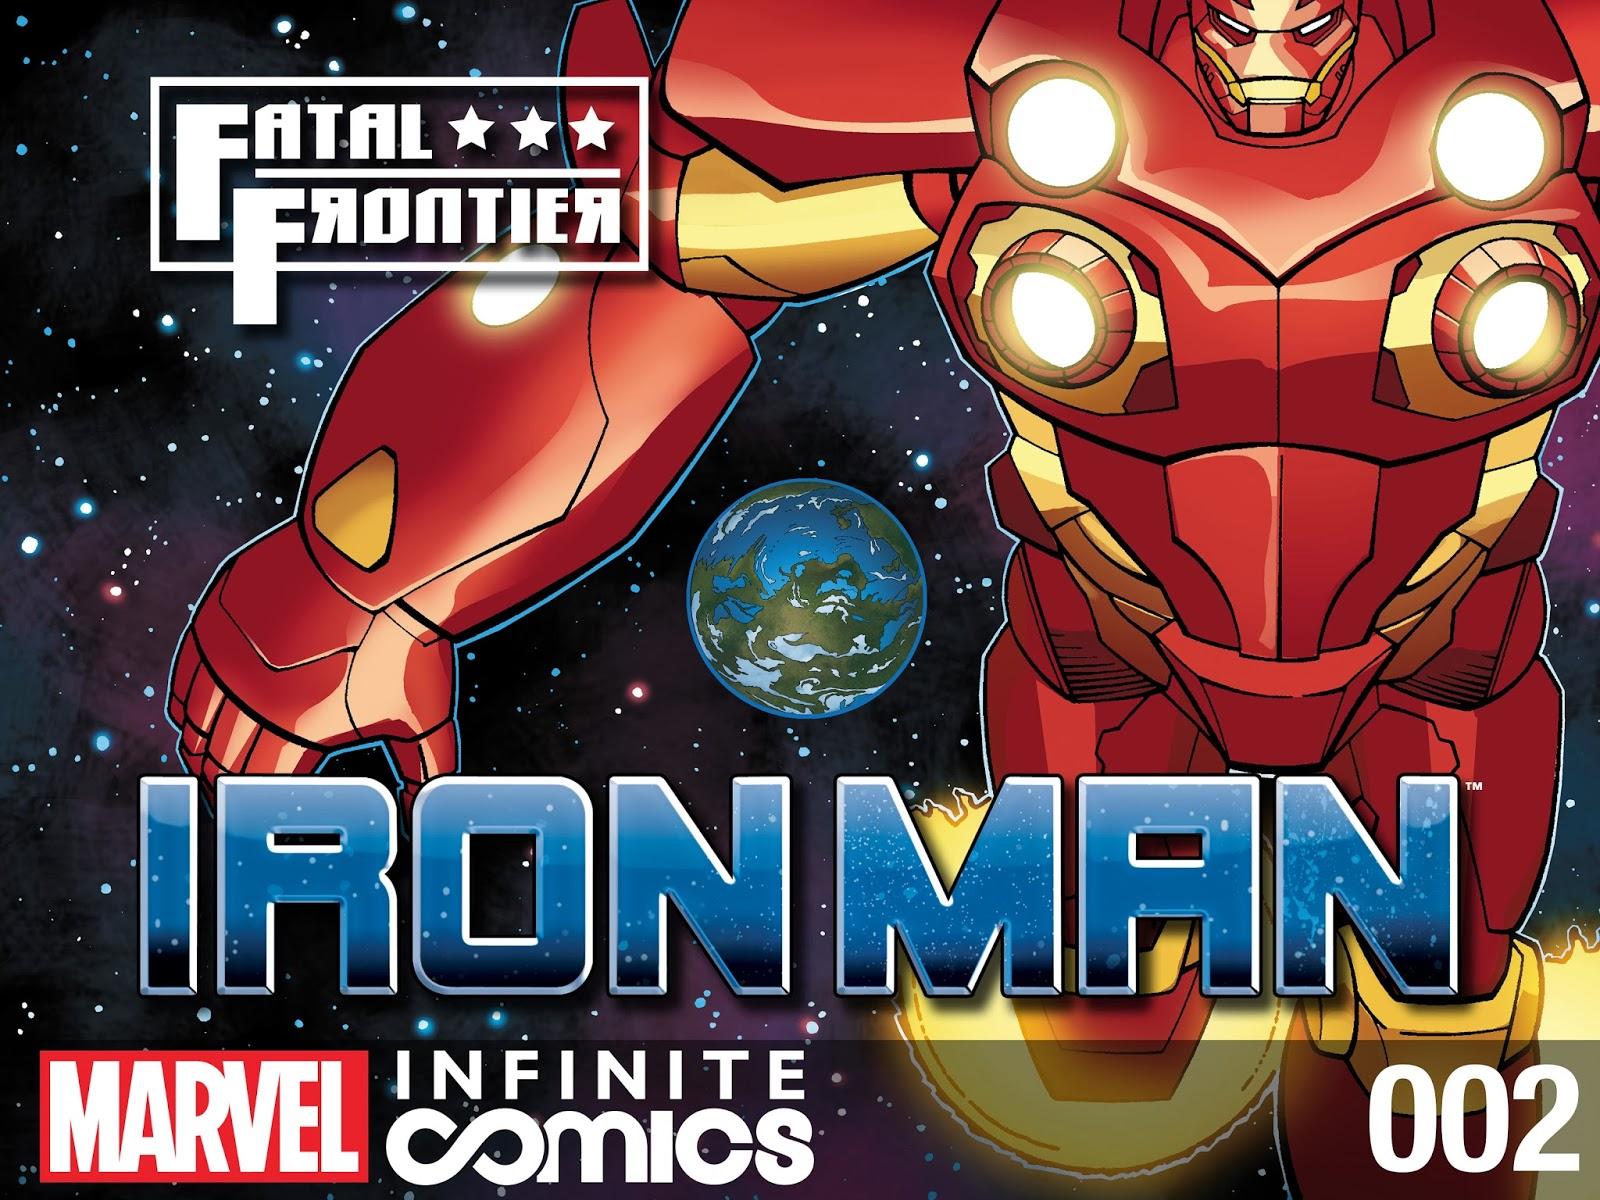 Iron Man: Fatal Frontier Infinite Comic Vol. 1 #2